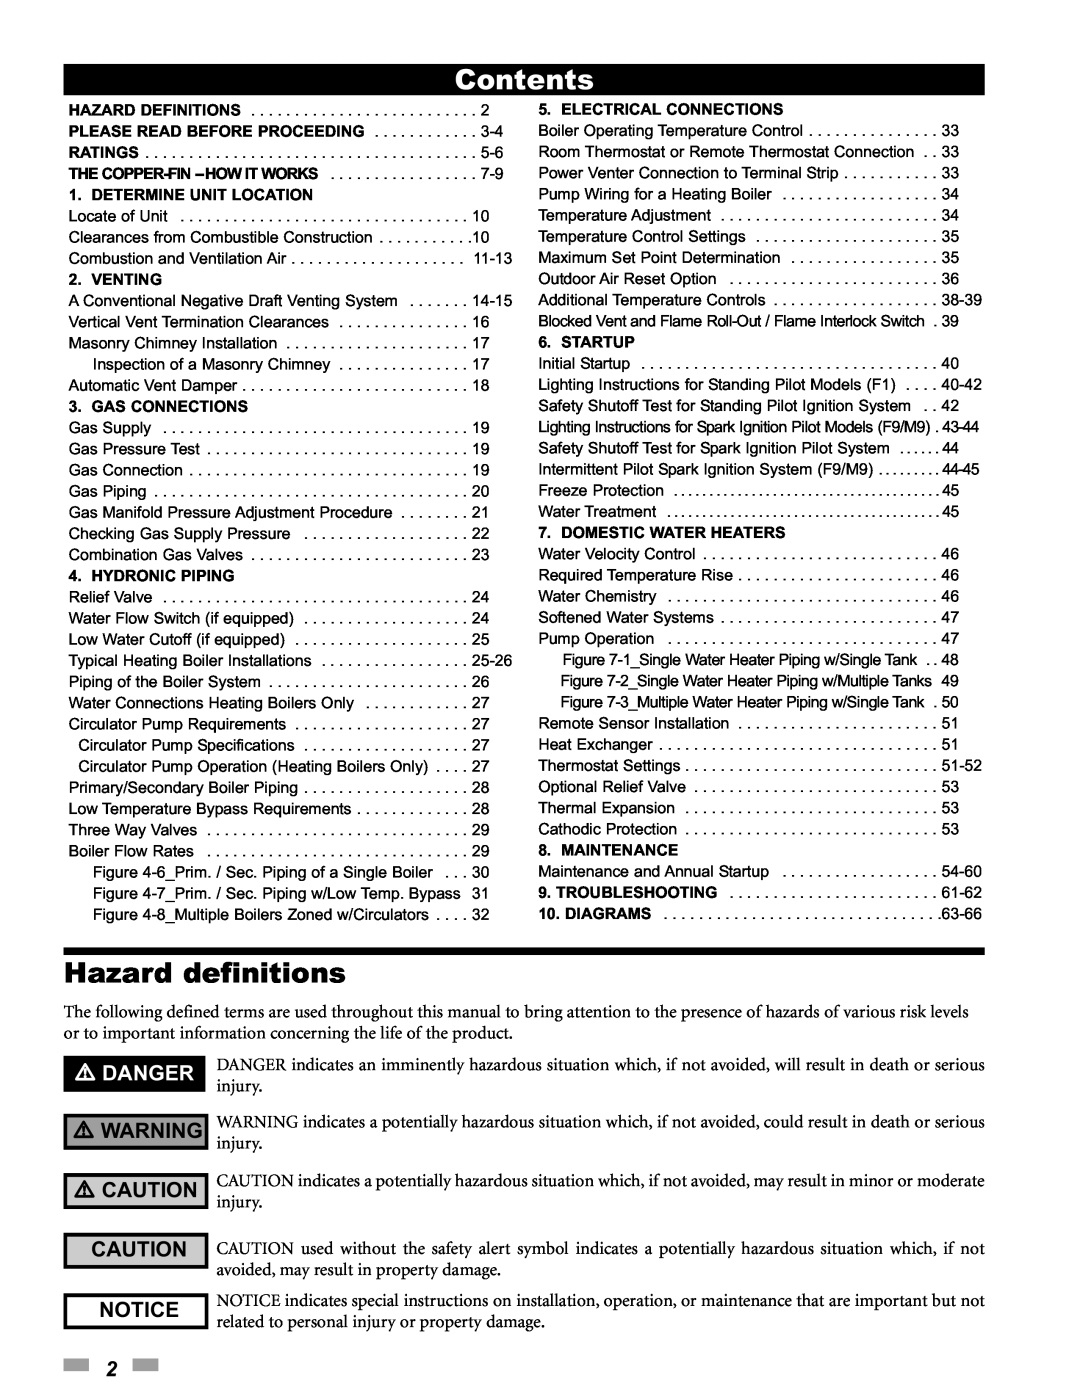 Lochinvar 500, 90 service manual Hazard definitions, Danger, Notice, Contents 